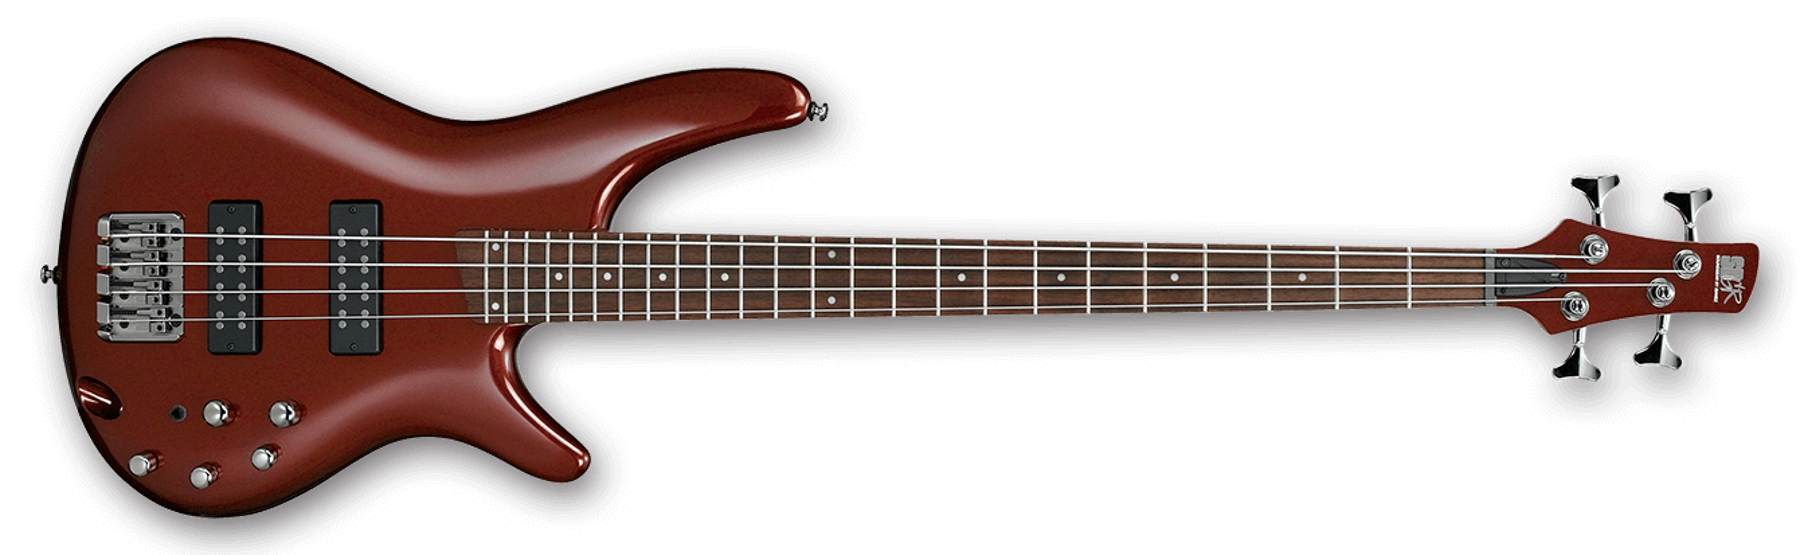 Ibanez SR300E Bass Guitar, 4 String - Sky Veil Matte for sale